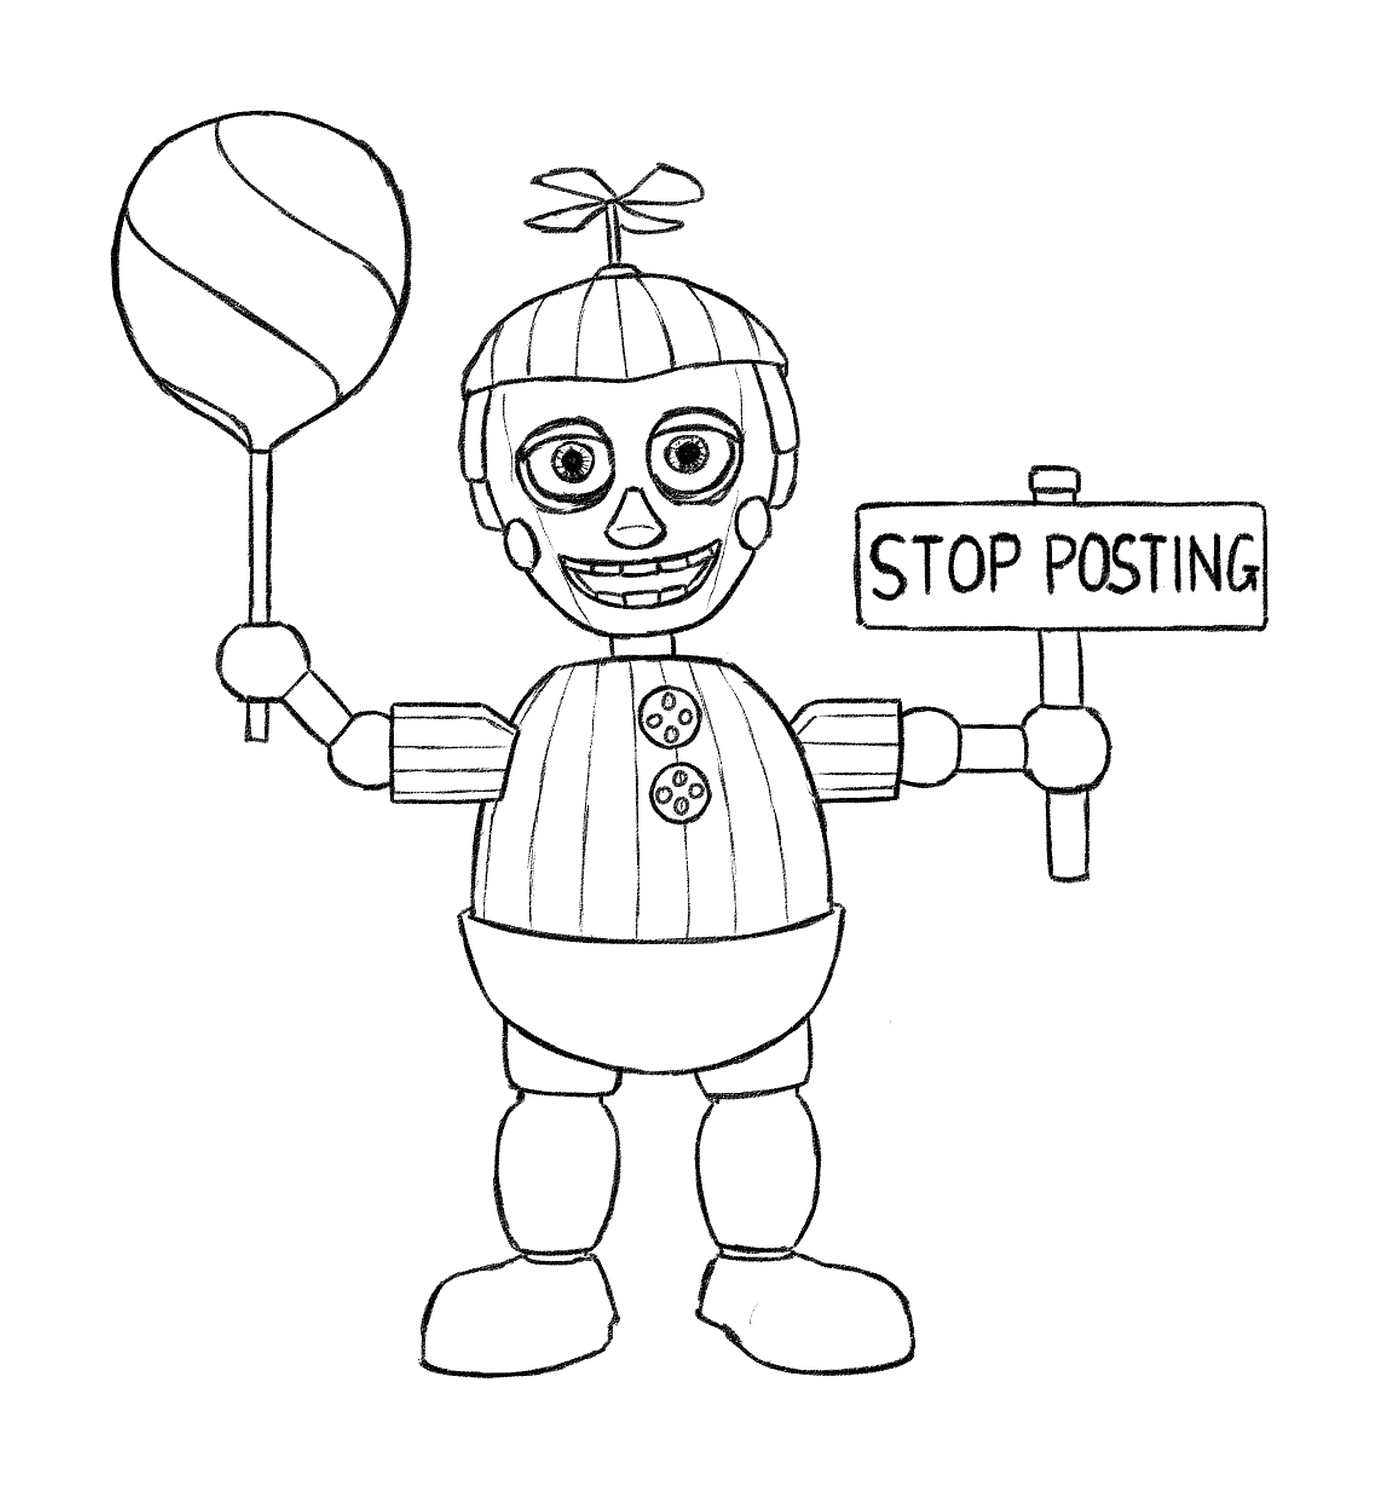  Un personaje de juguete sosteniendo una bola 